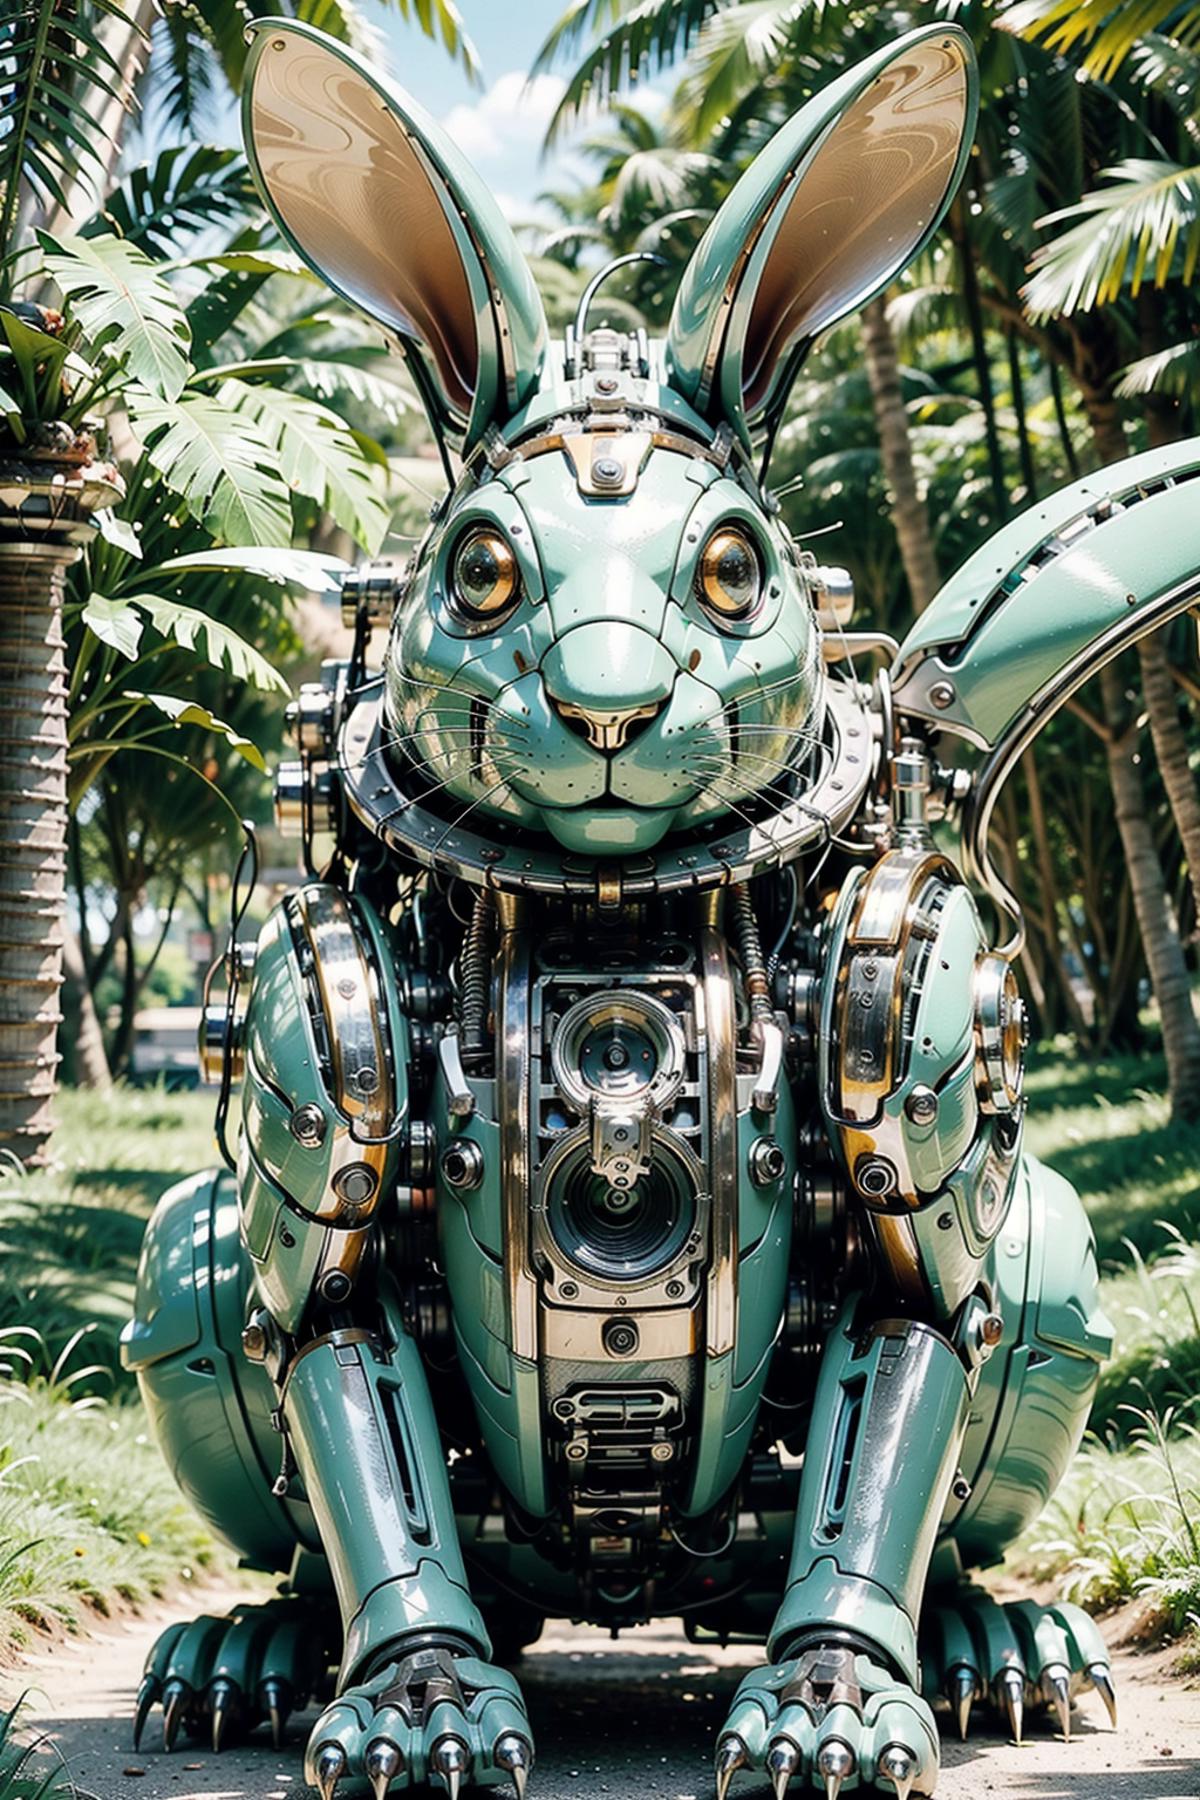 mechanical rabbit image by InfiniteLight